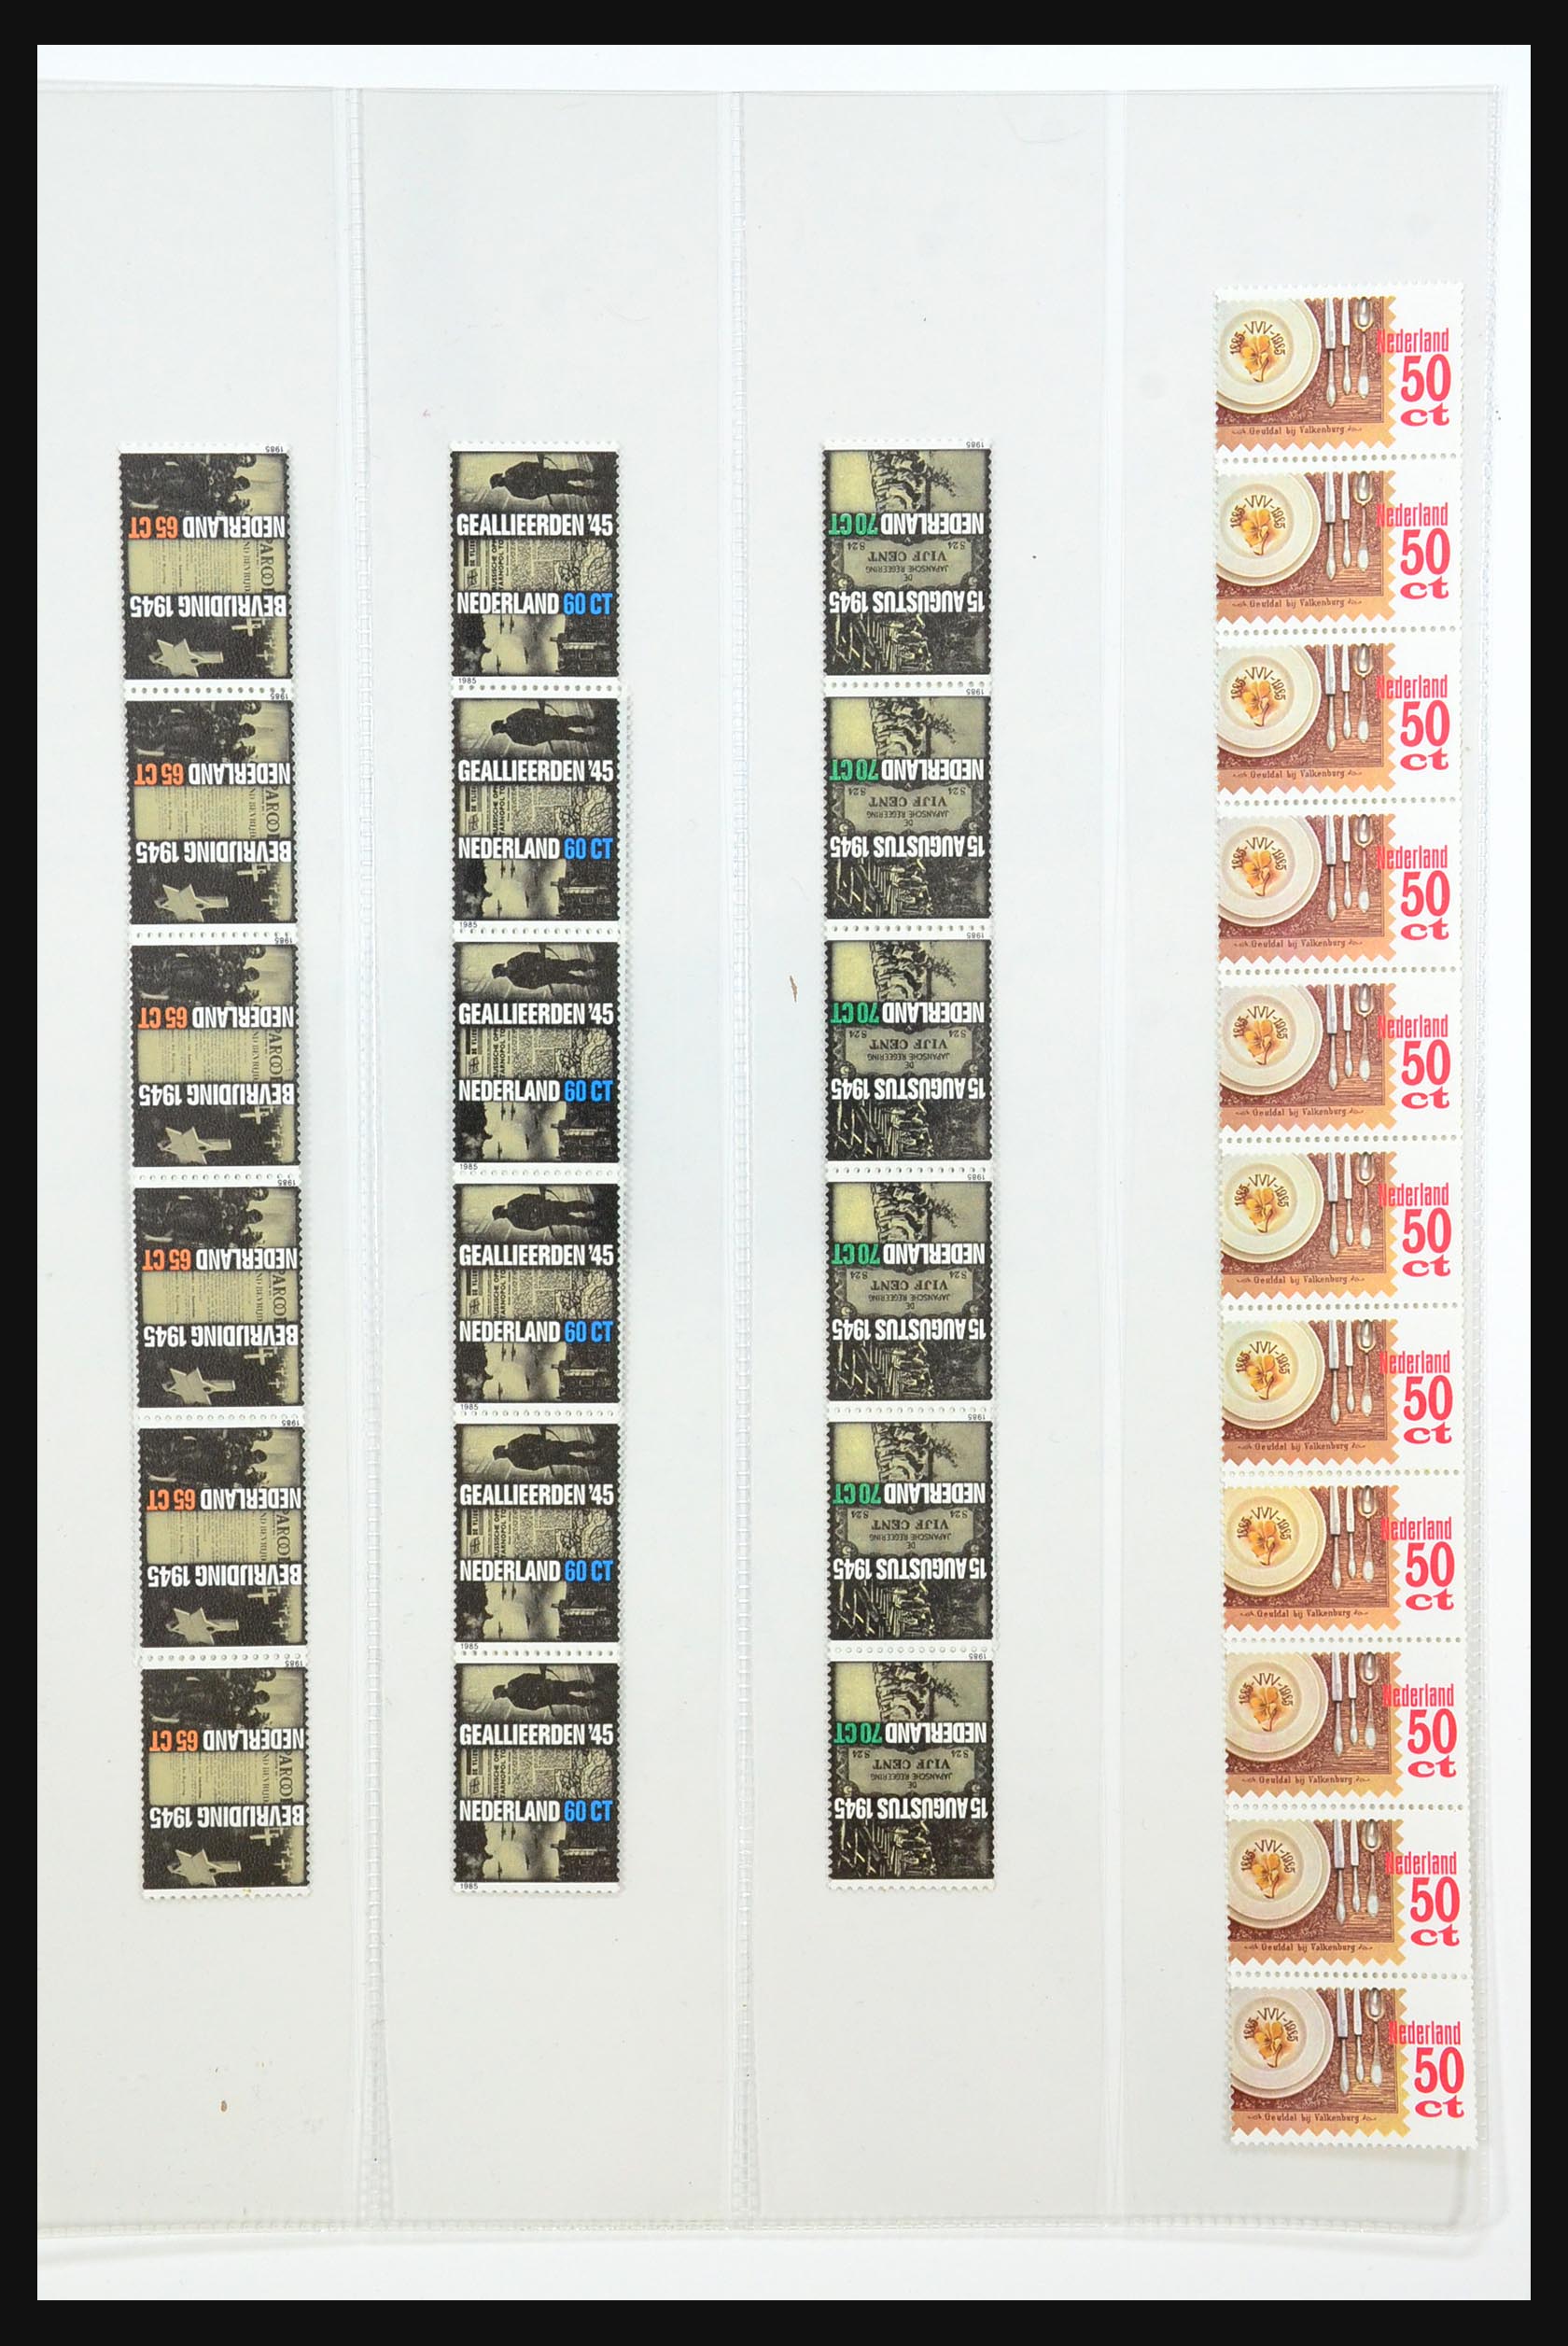 31463 033 - 31463 Nederland rolzegels 1953-1998.